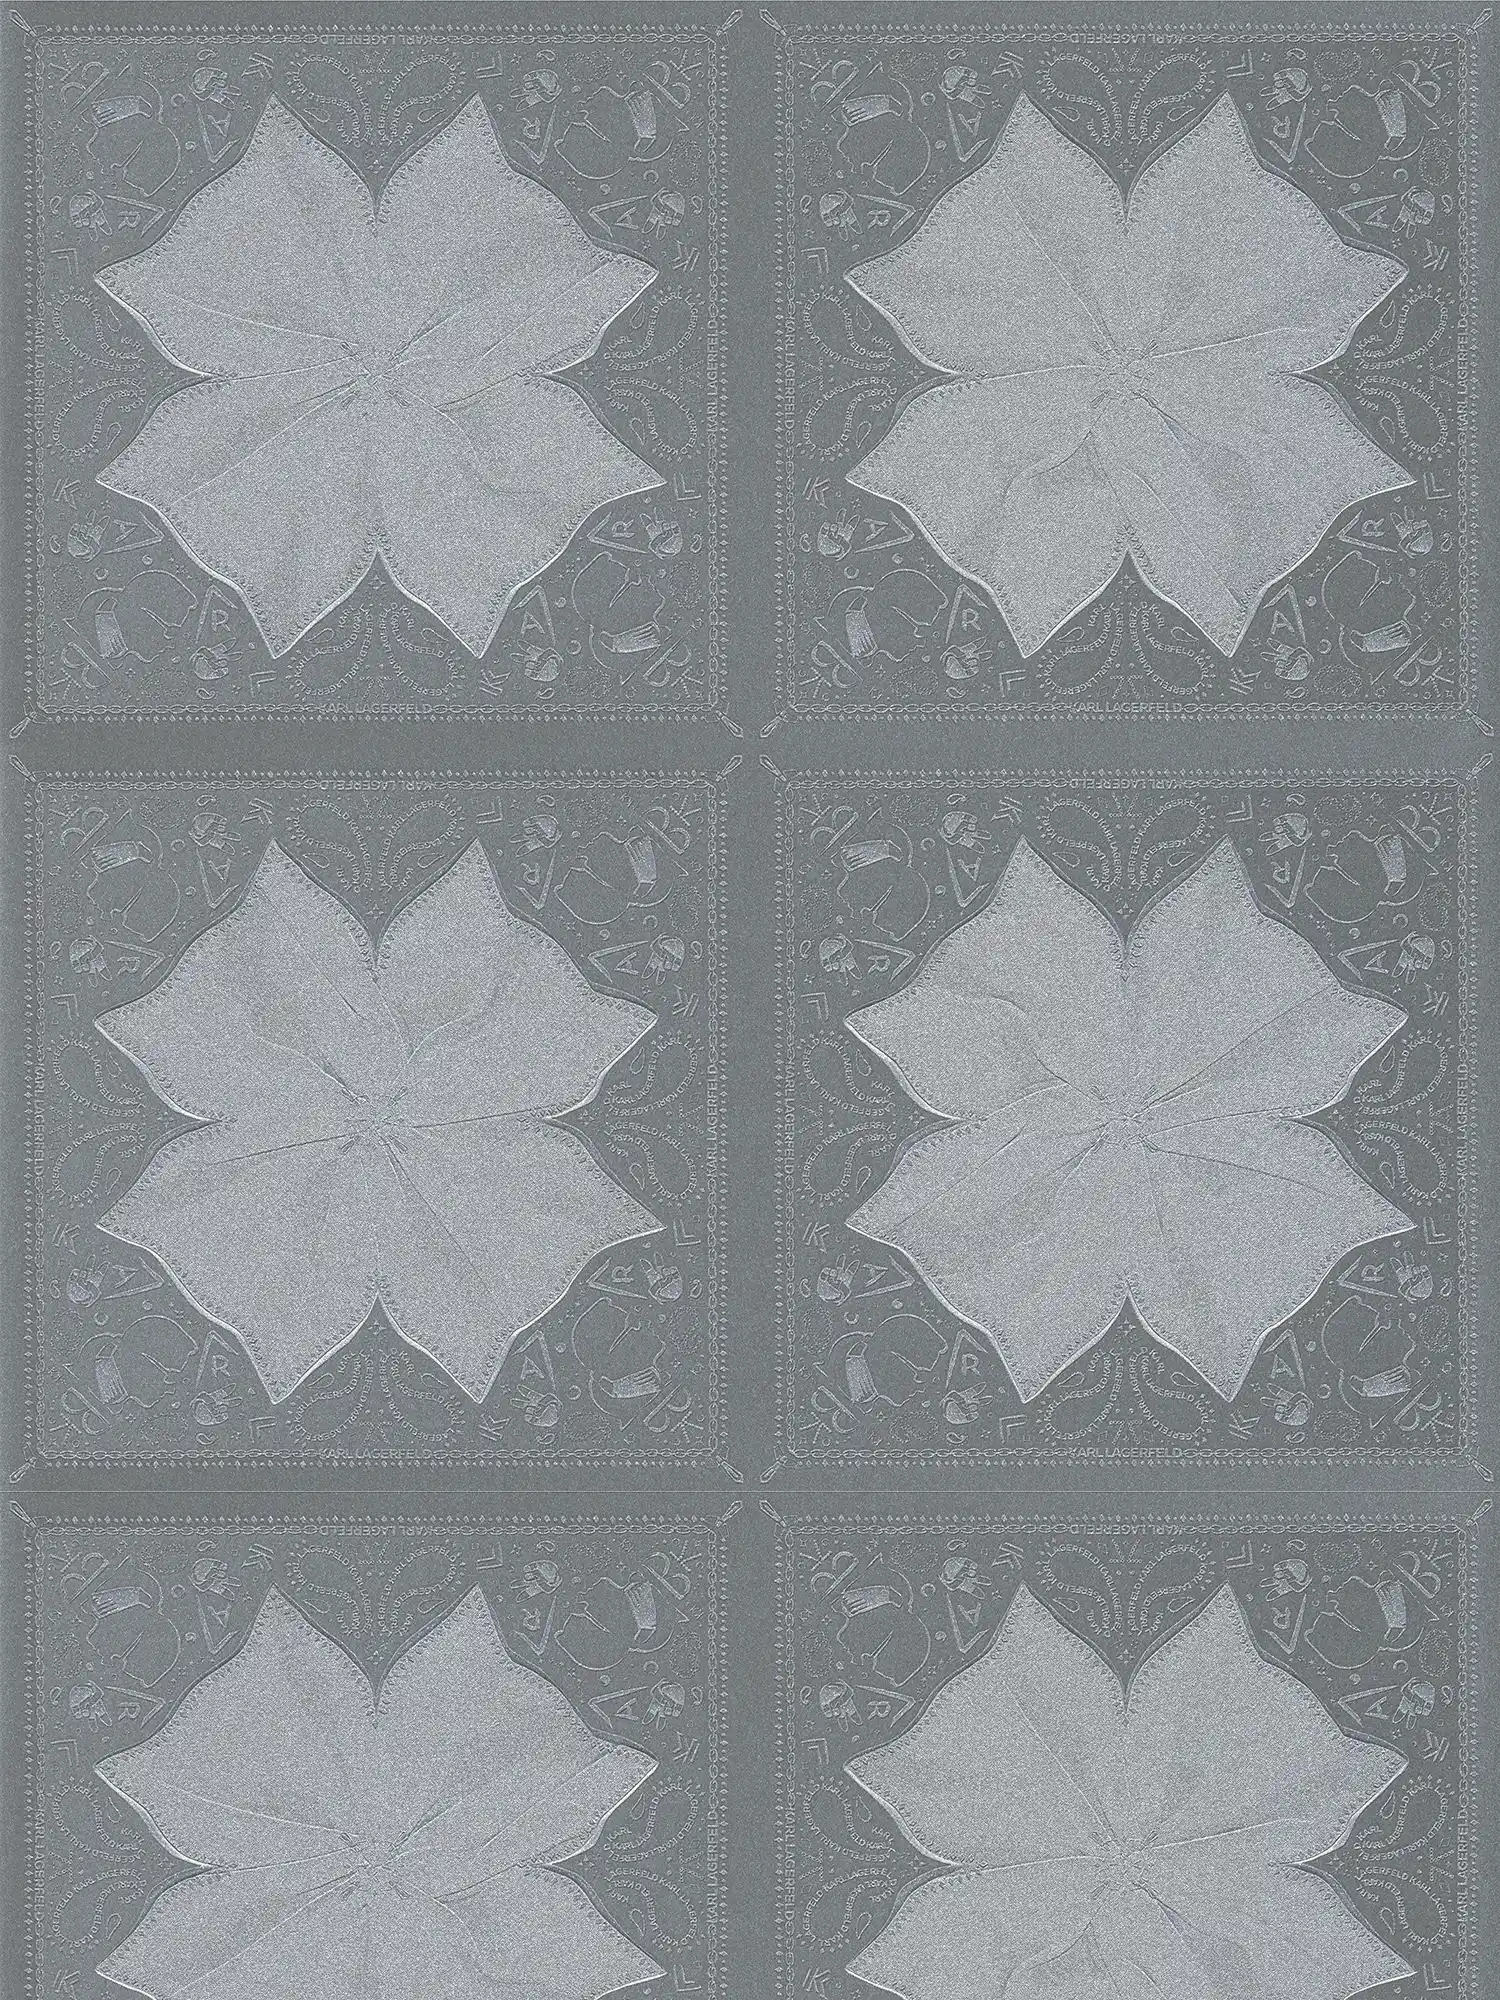 Papel pintado Karl LAGERFELD Tie Pattern - Gris, Metalizado
